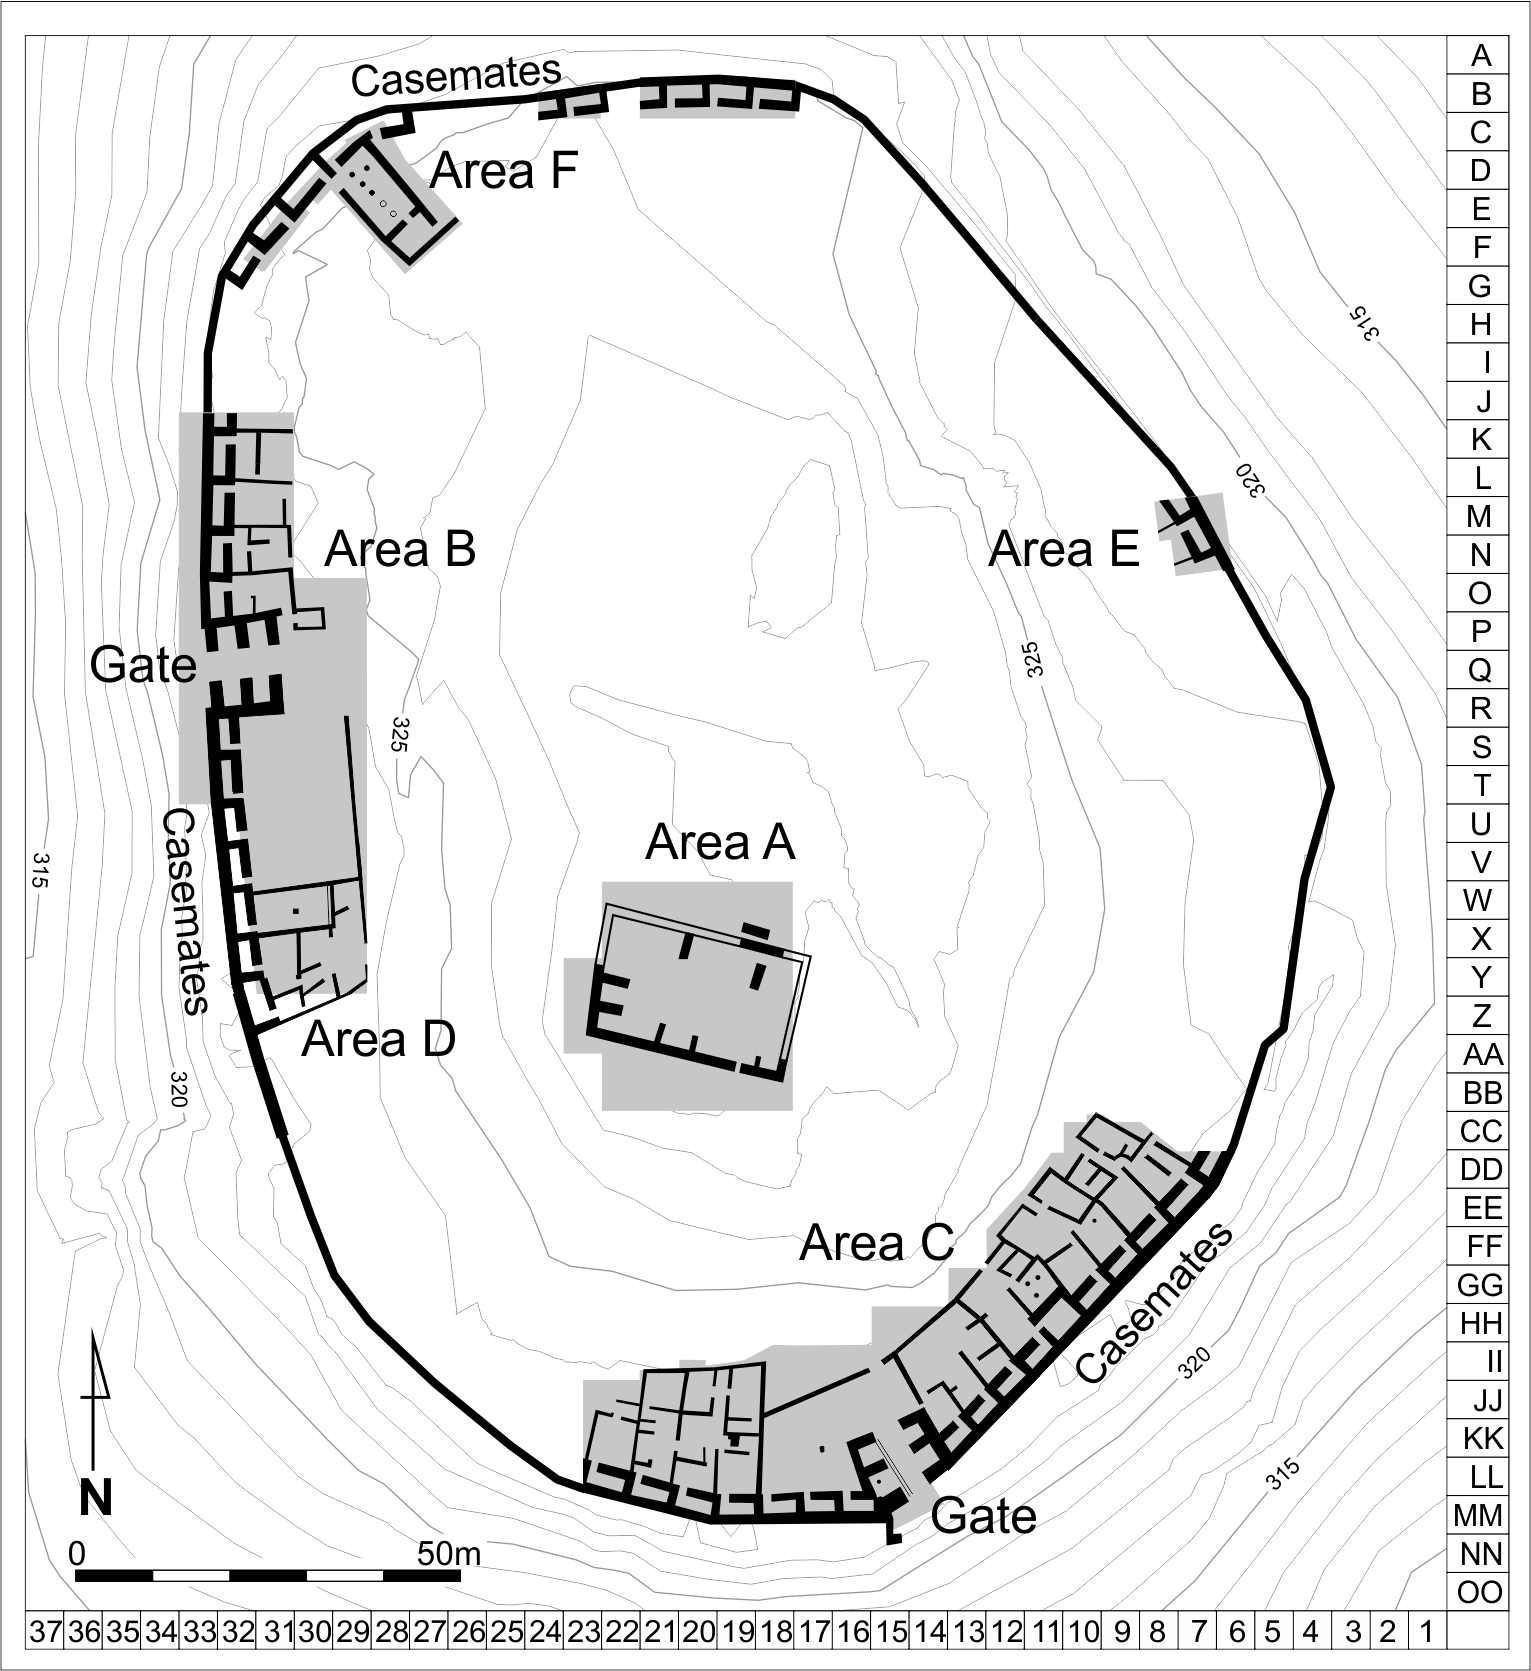 Illustration 3: The Khirbet Qeiyafa Iron Age city plan, as we know from the last excavation season